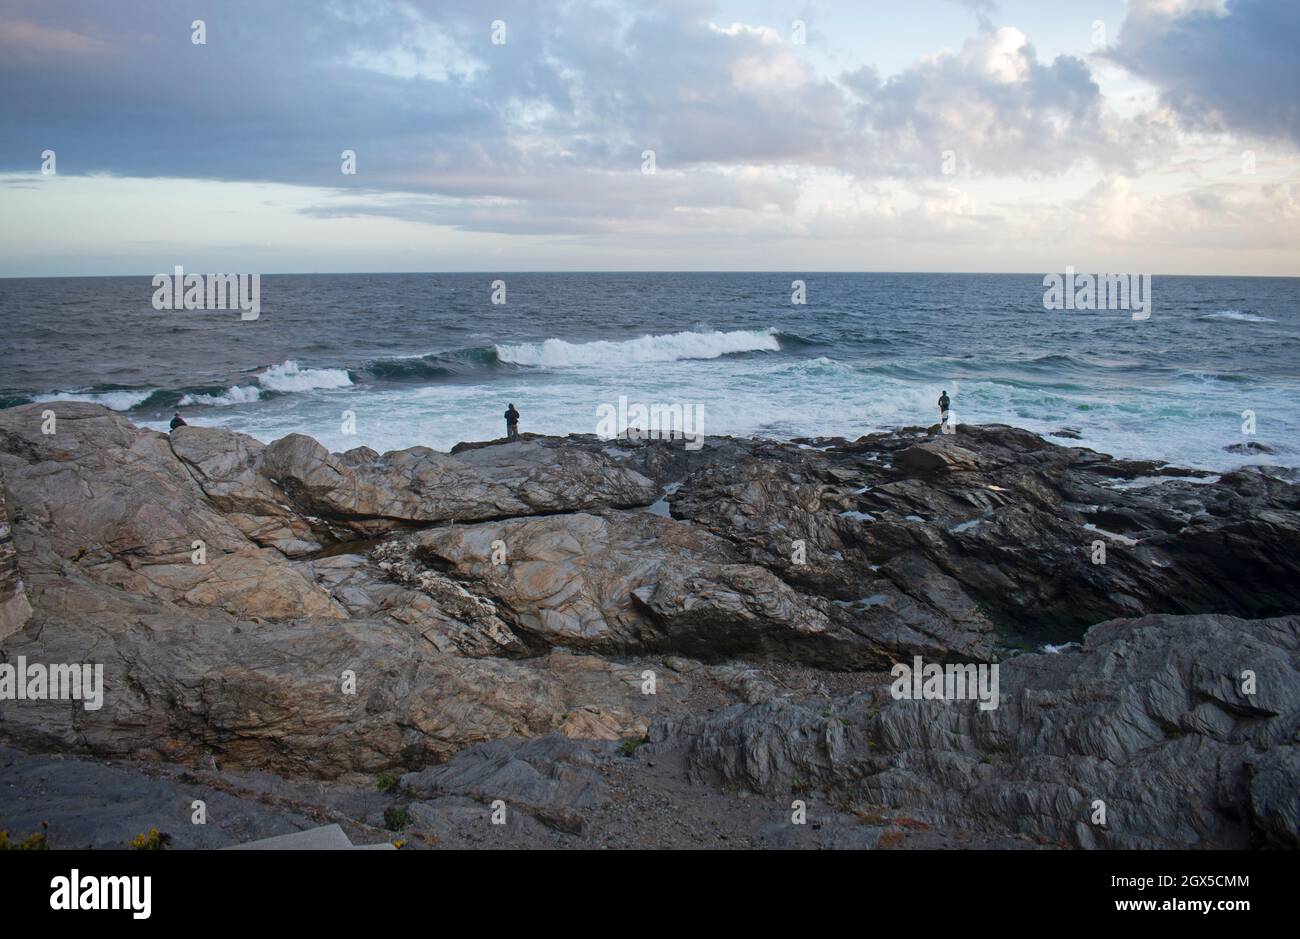 Fishermen fishing on rocky shore in Jamestown, Rhode Island as waves crash into shore -03 Stock Photo